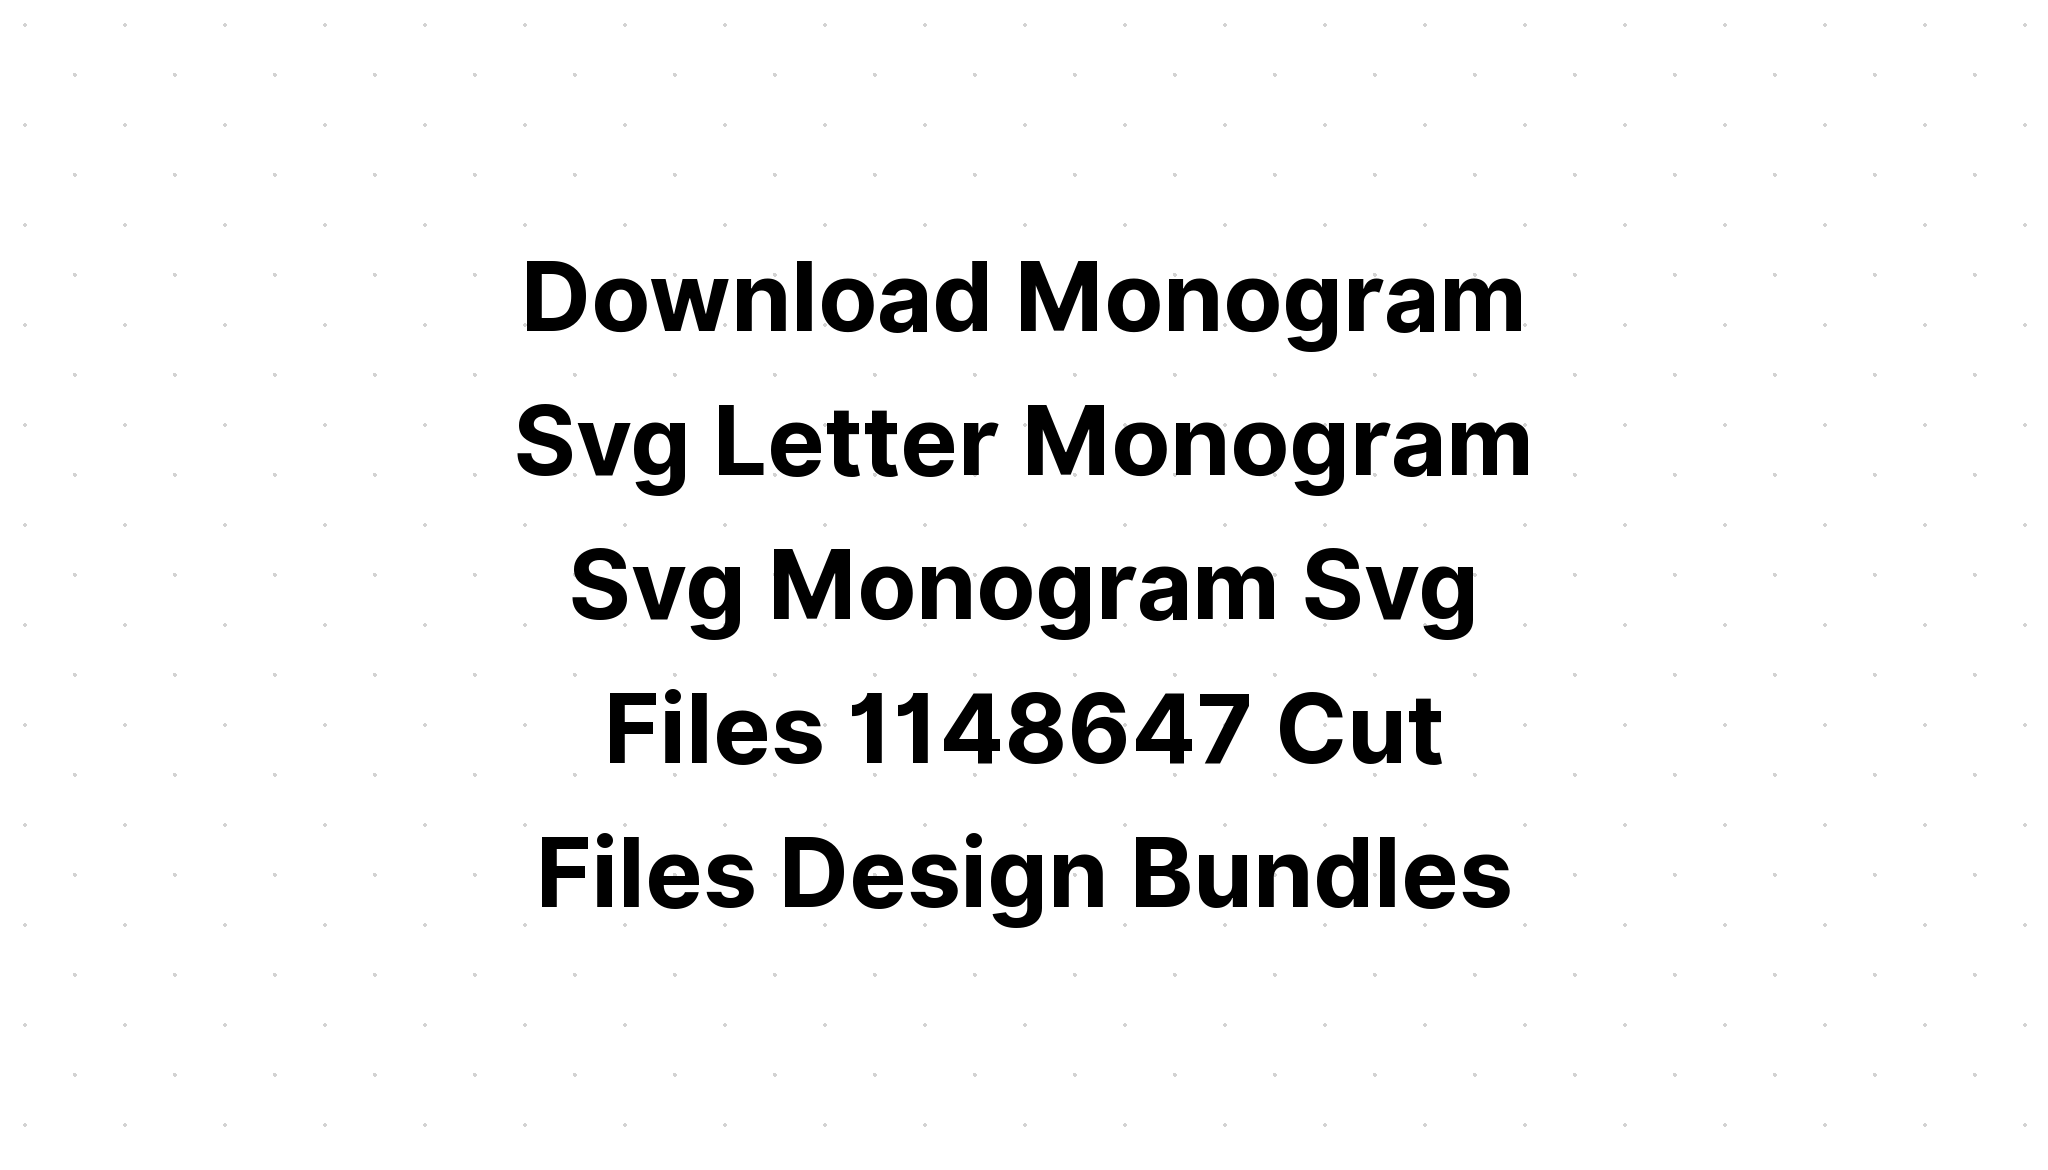 Download Anderson Split Monogram Svg Free - Free SVG Cut File